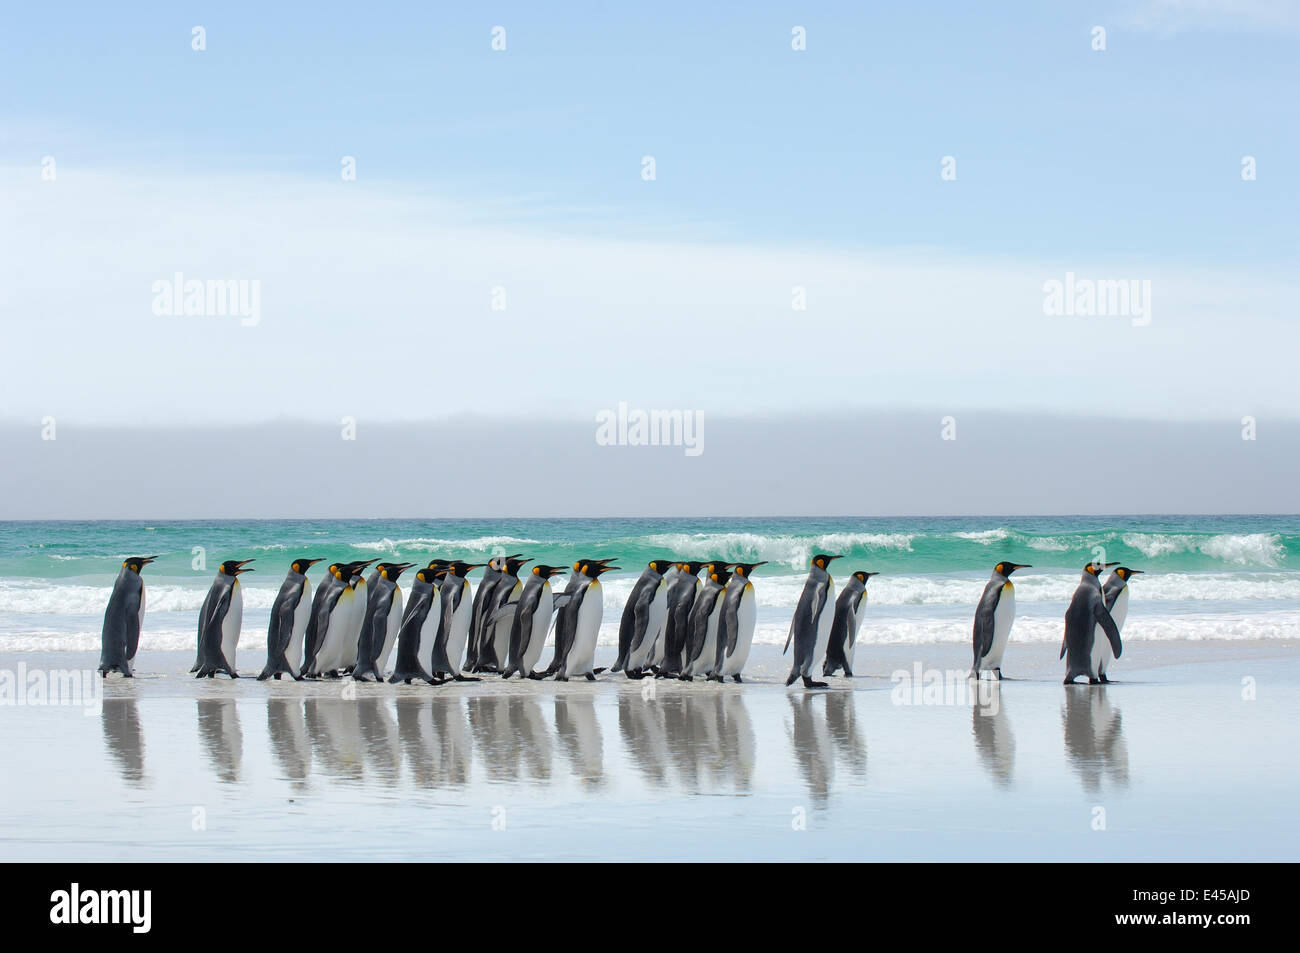 Group of King penguins {Aptenodytes patagonicus} walking in line along beach, Falkland Islands. Stock Photo